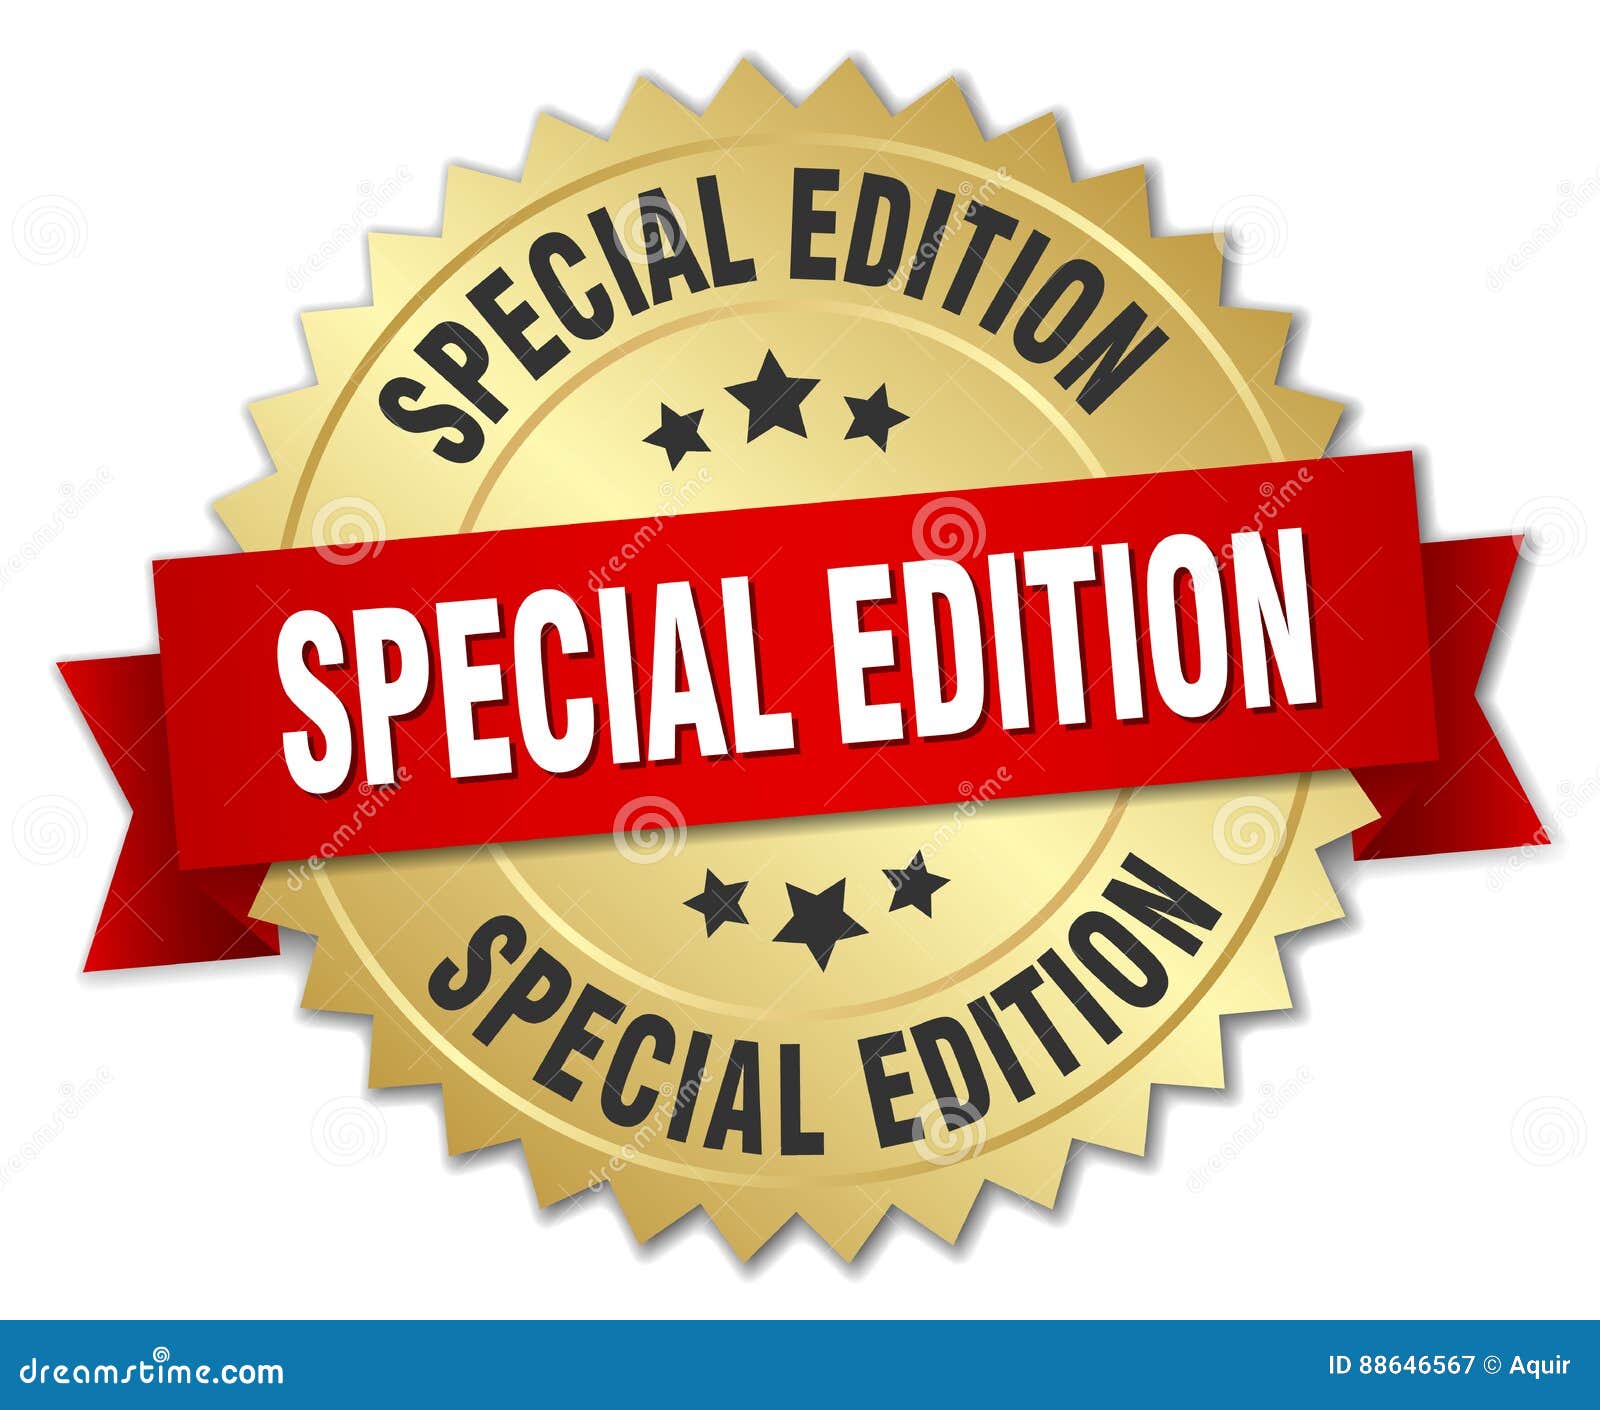 4274 Special Edition Stock Illustrations, Vectors & Clipart - Dreamstime